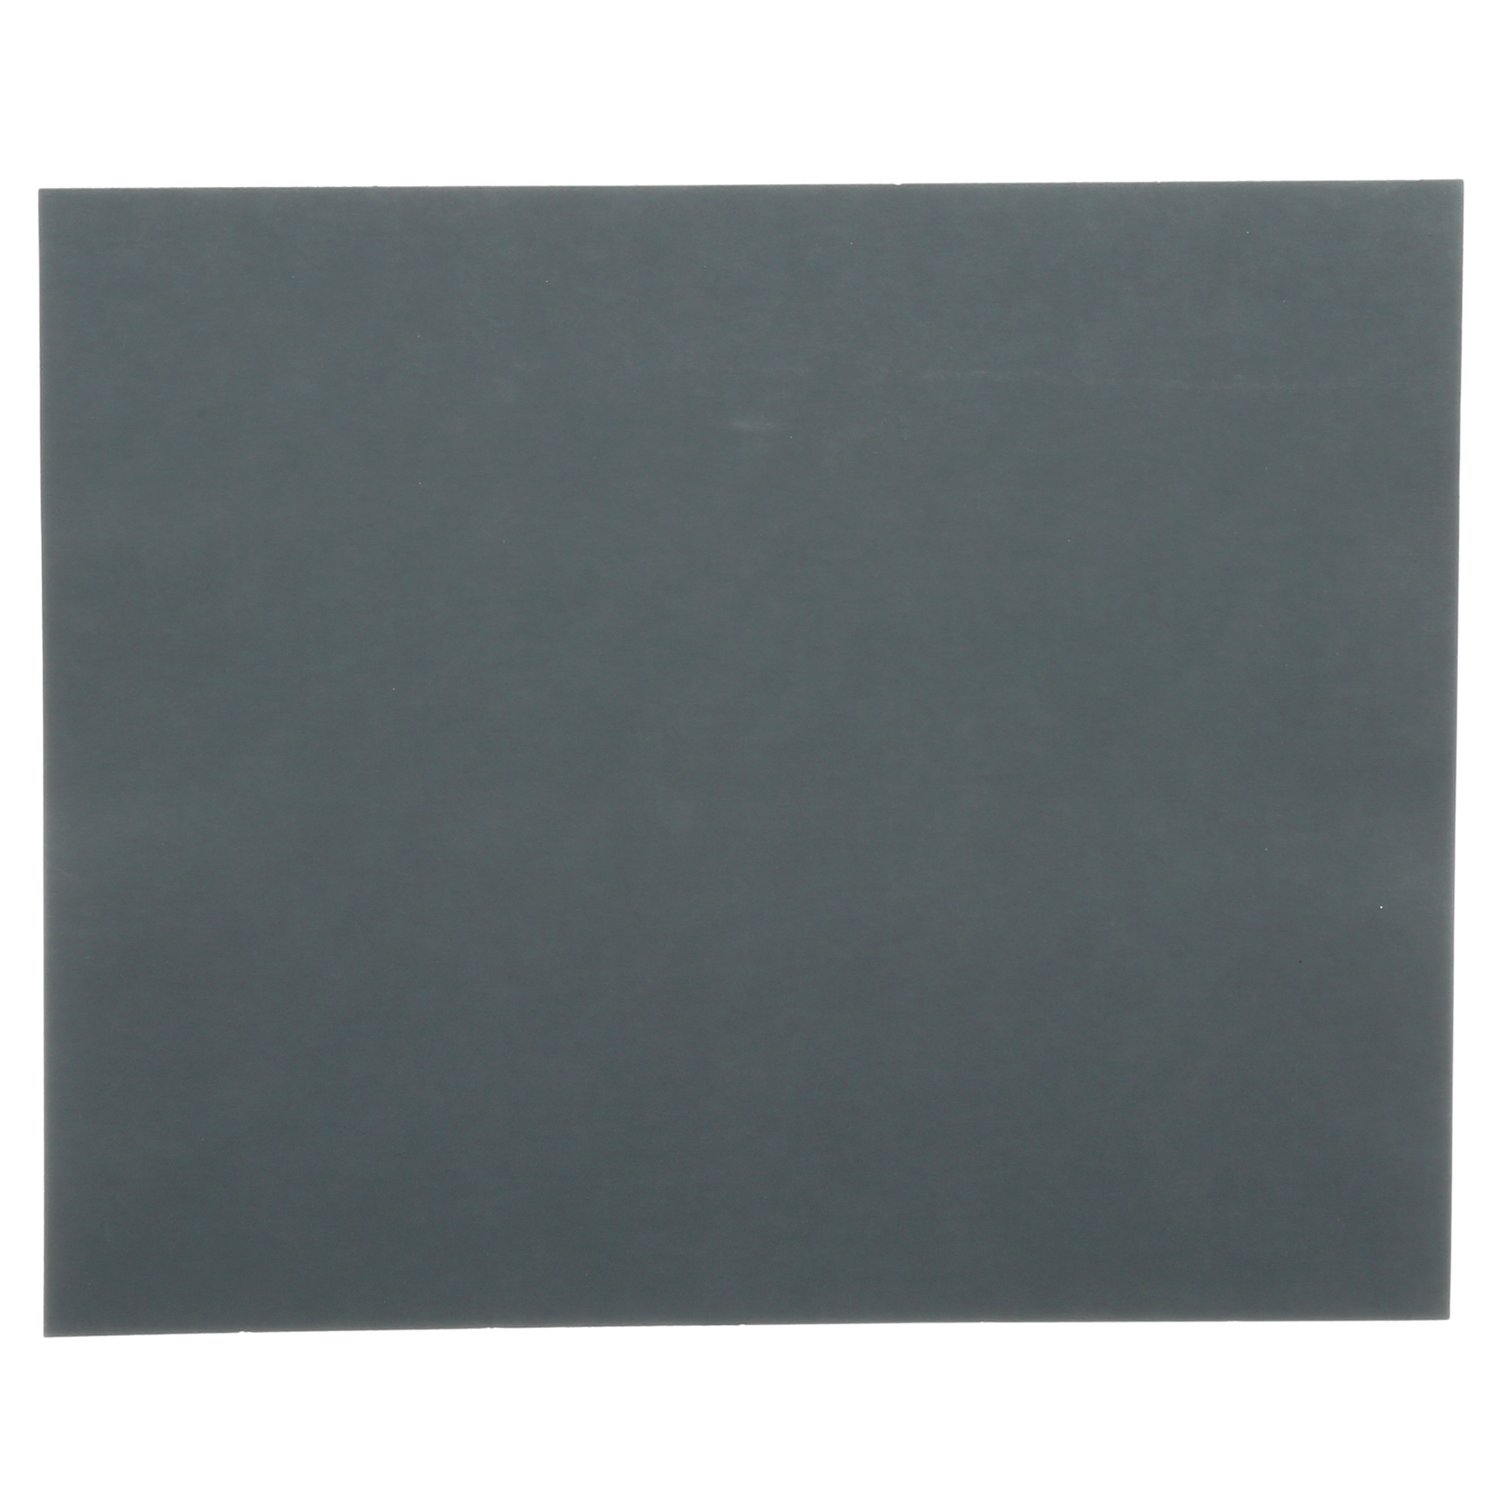 7000148223 - 3M Wetordry Abrasive Sheet 413Q, 02000, 600, 9 in x 11 in, 50 sheets
per carton, 5 cartons per case